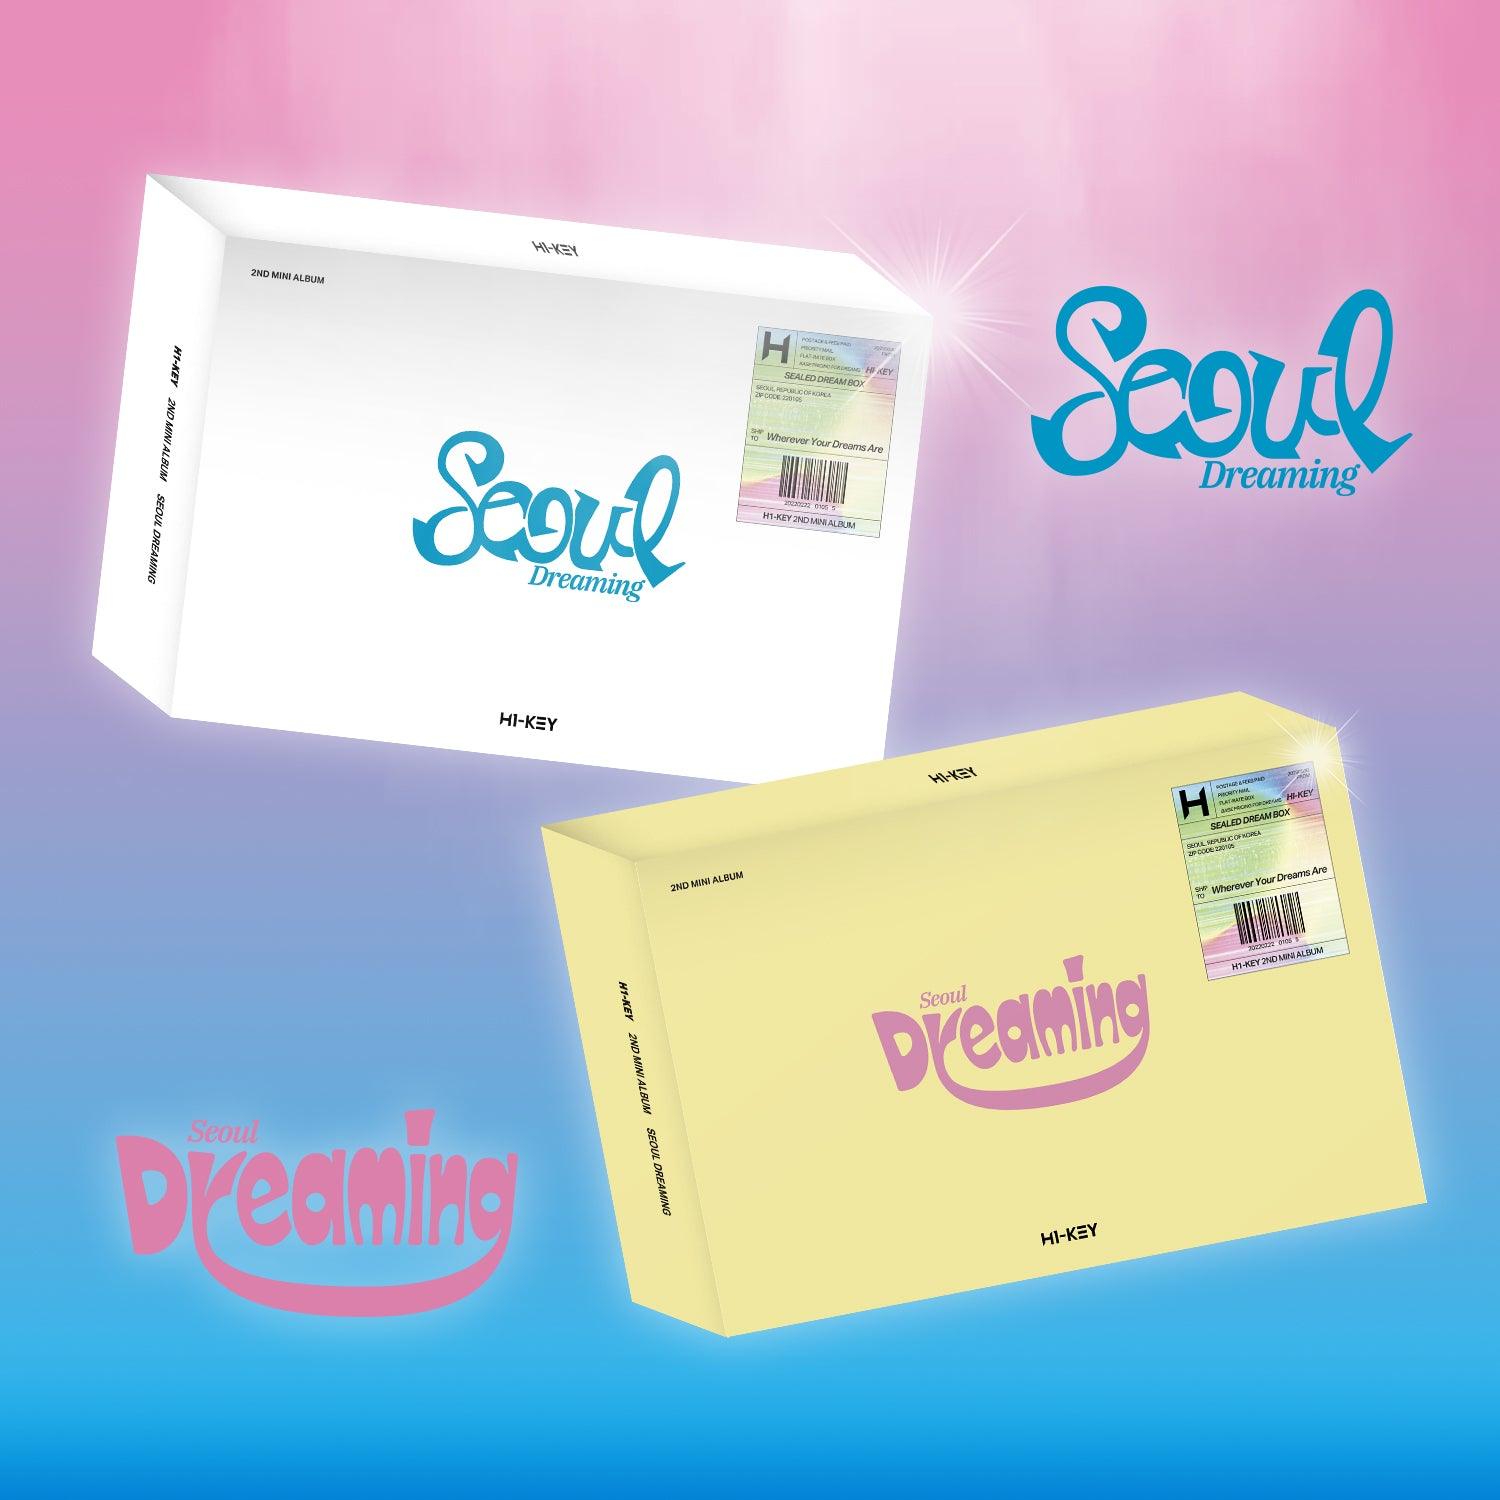 H1-KEY Mini Album Vol. 2 - Seoul Dreaming (Random) - KKANG